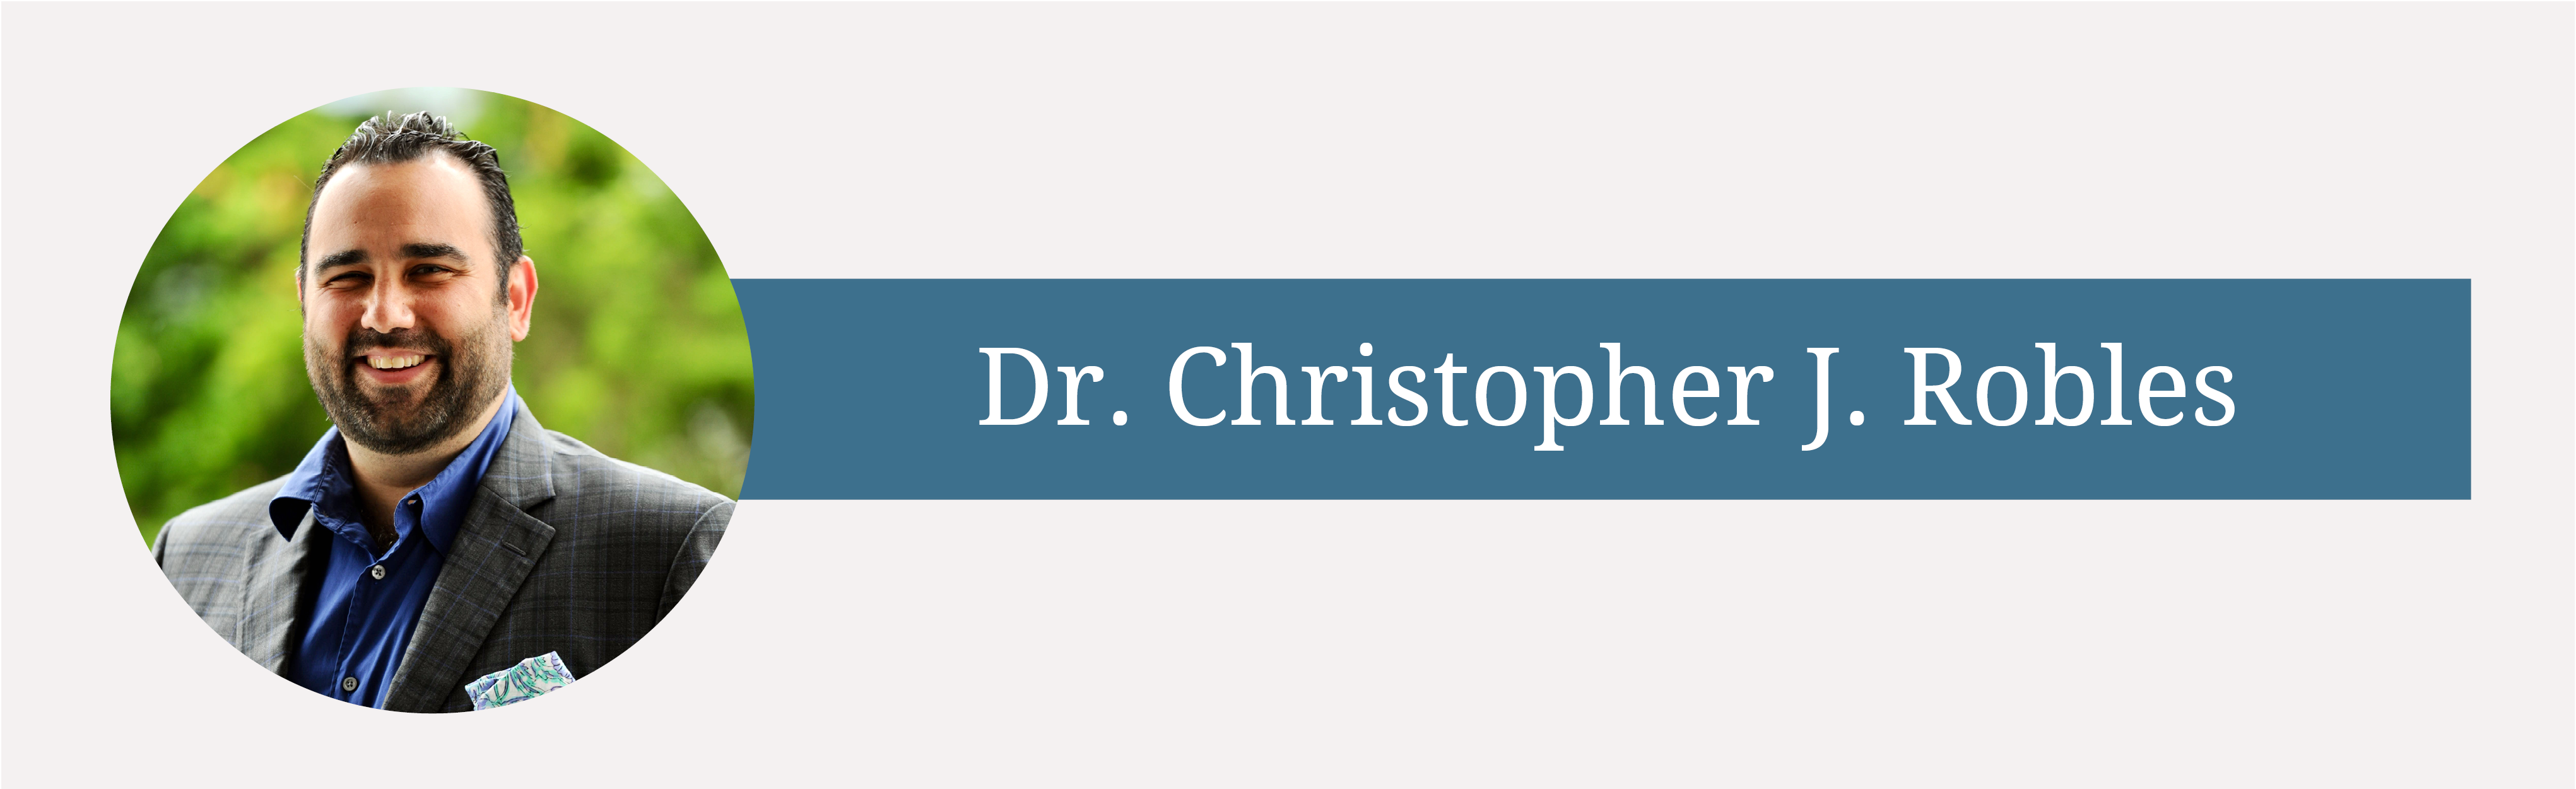 Christopher J. Robles, DO, Joins White Plains Hospital Physician Associates